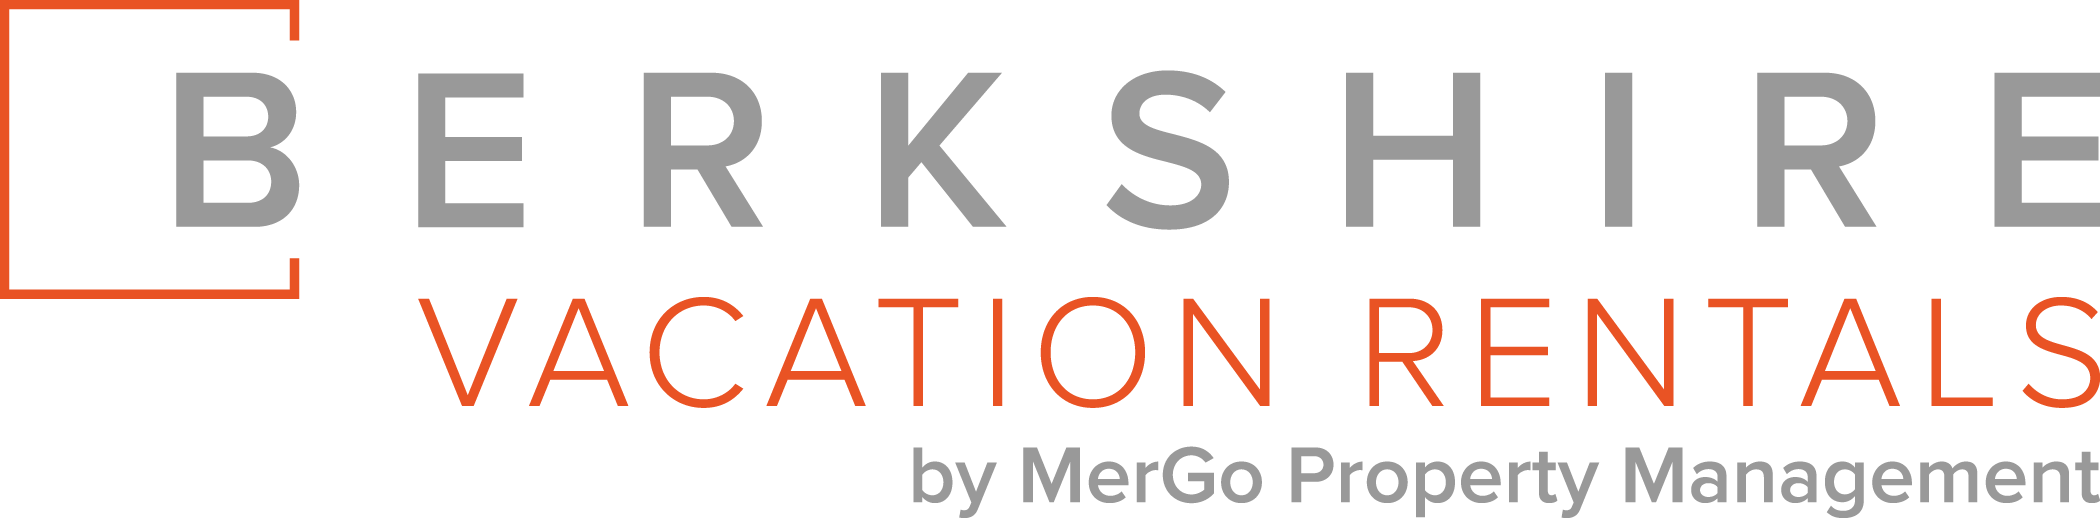 Berkshire Vacation Rentals - MerGo Property Management Brand Logo